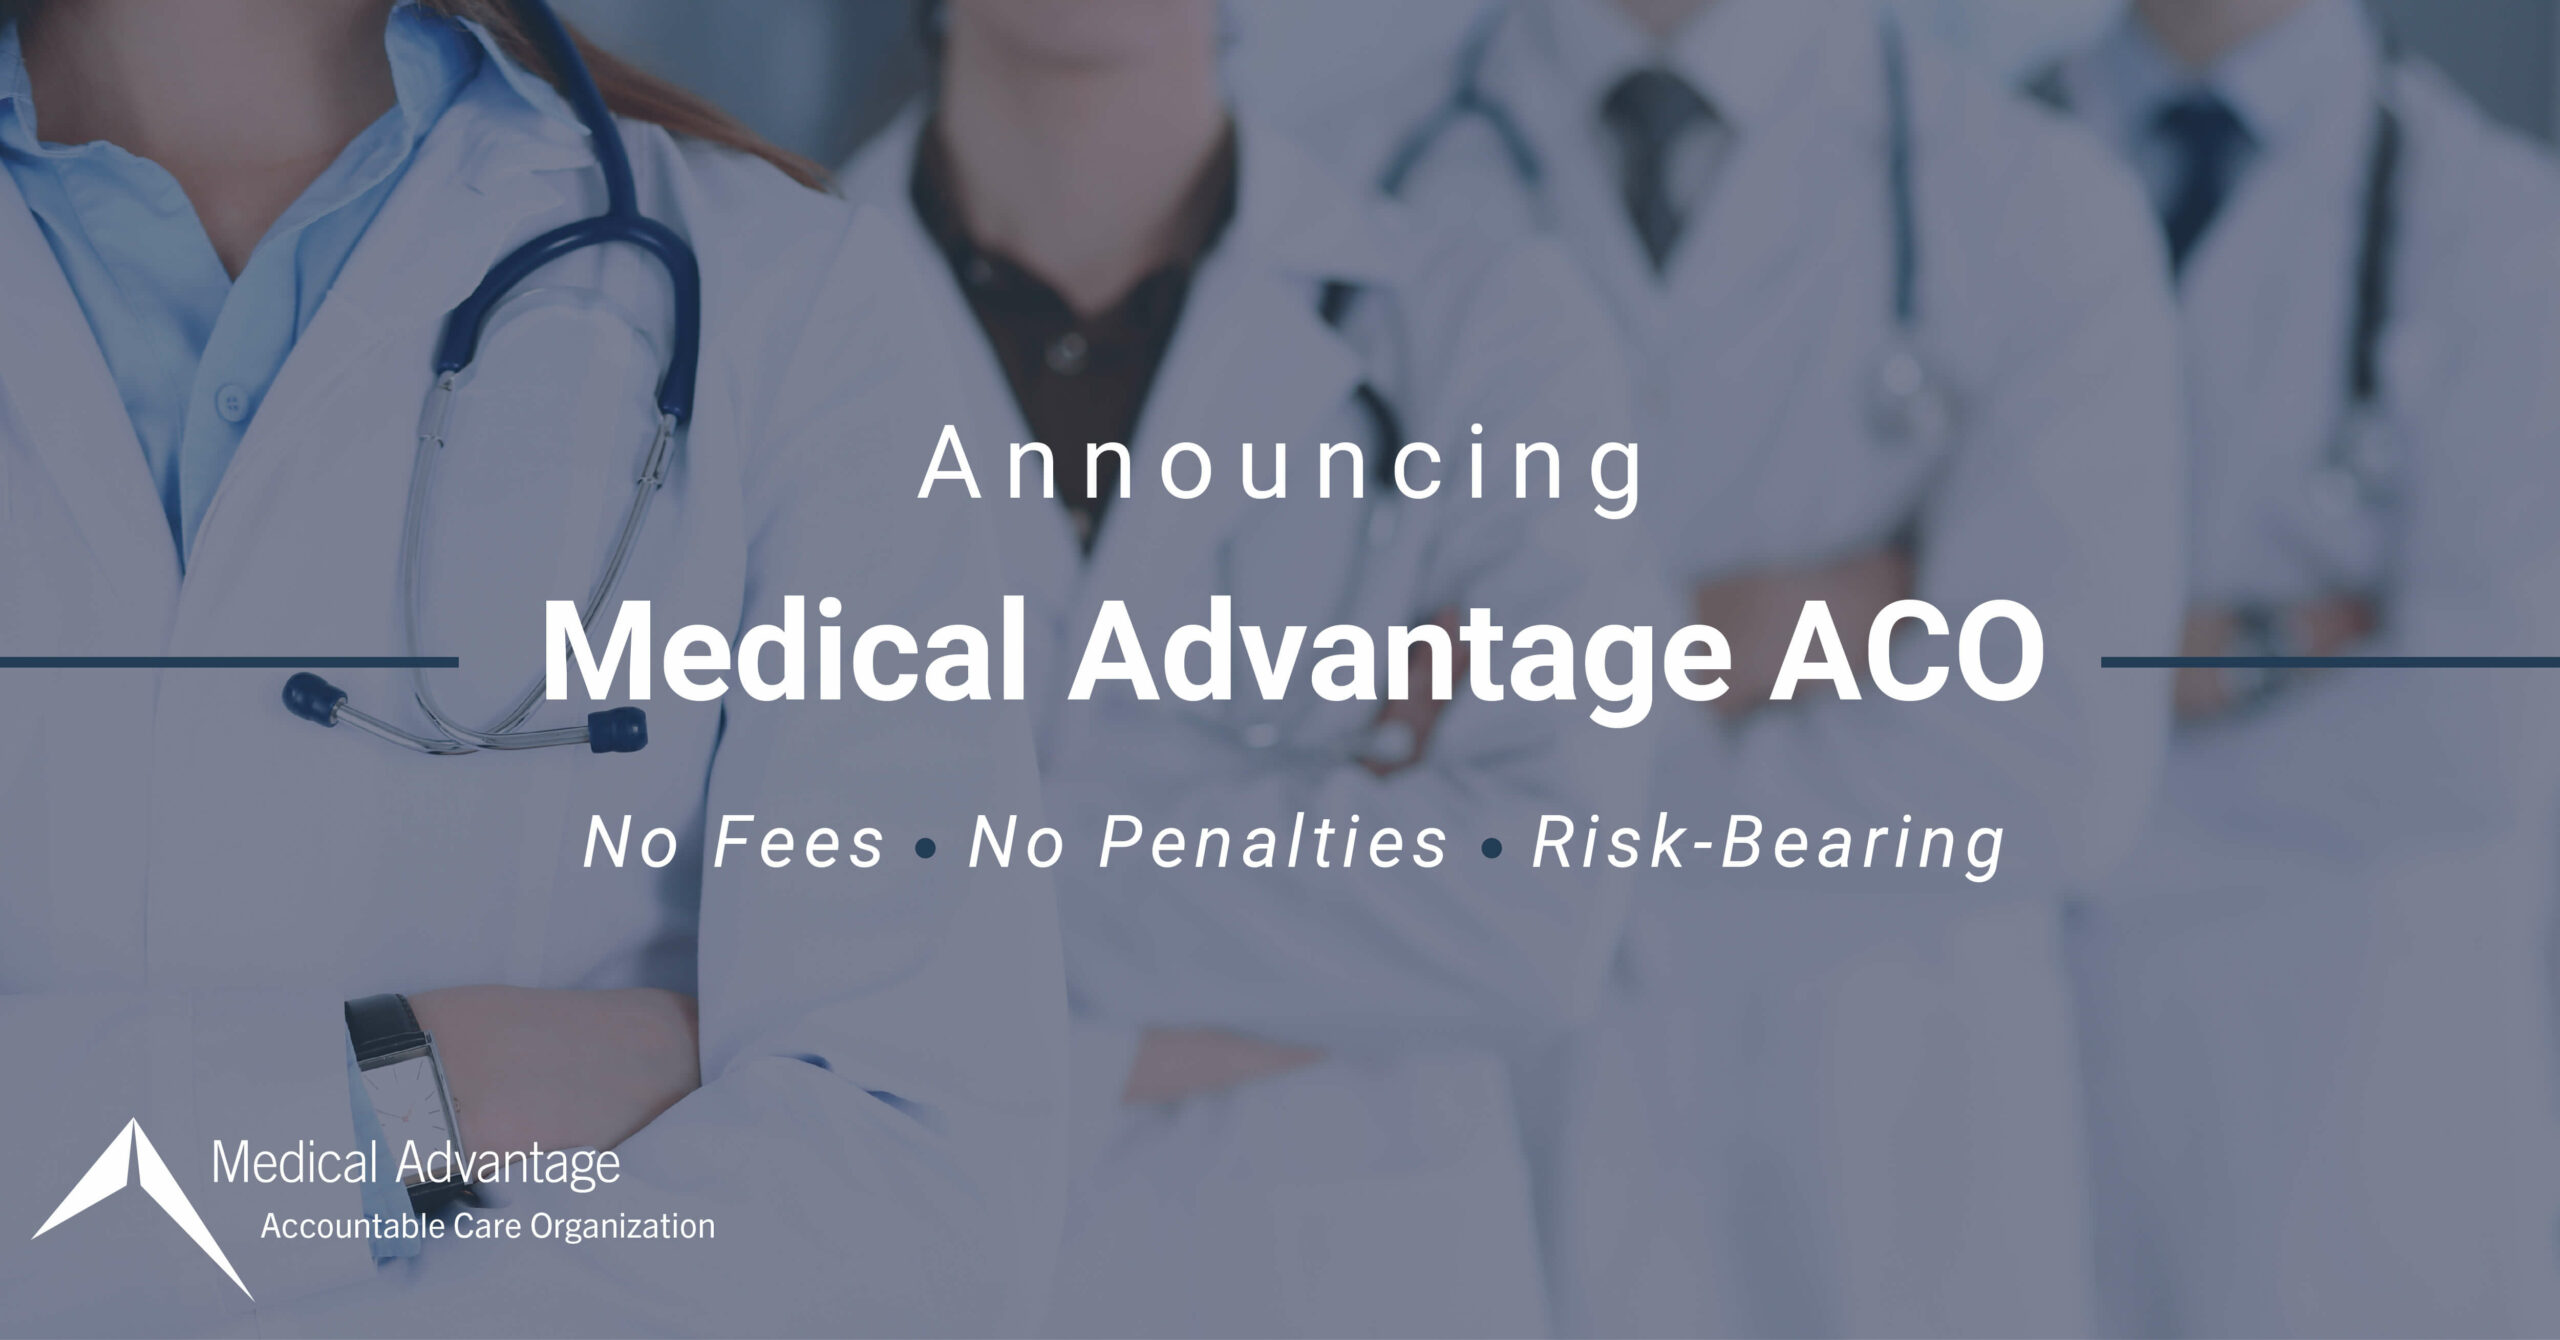 ACO announcement graphic for medical advantage ACO